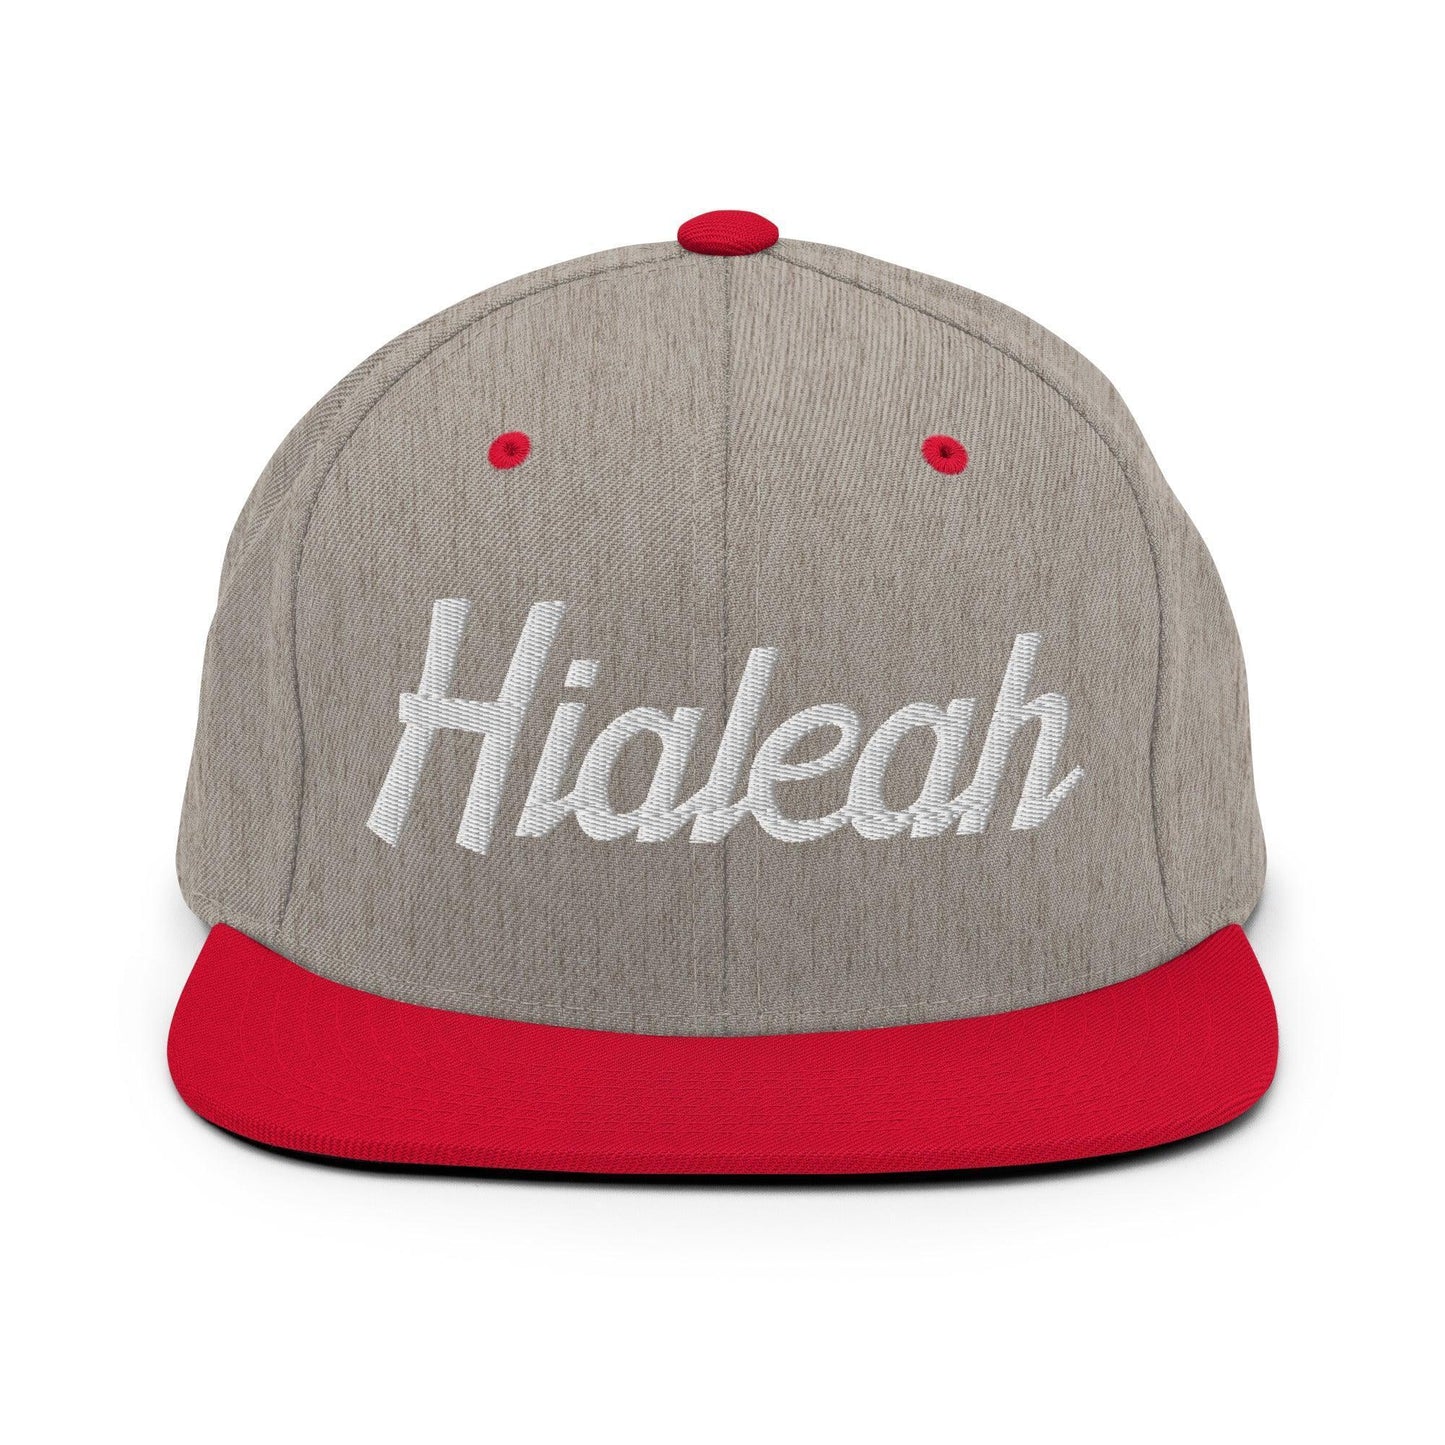 Hialeah Script Snapback Hat Heather Grey/ Red